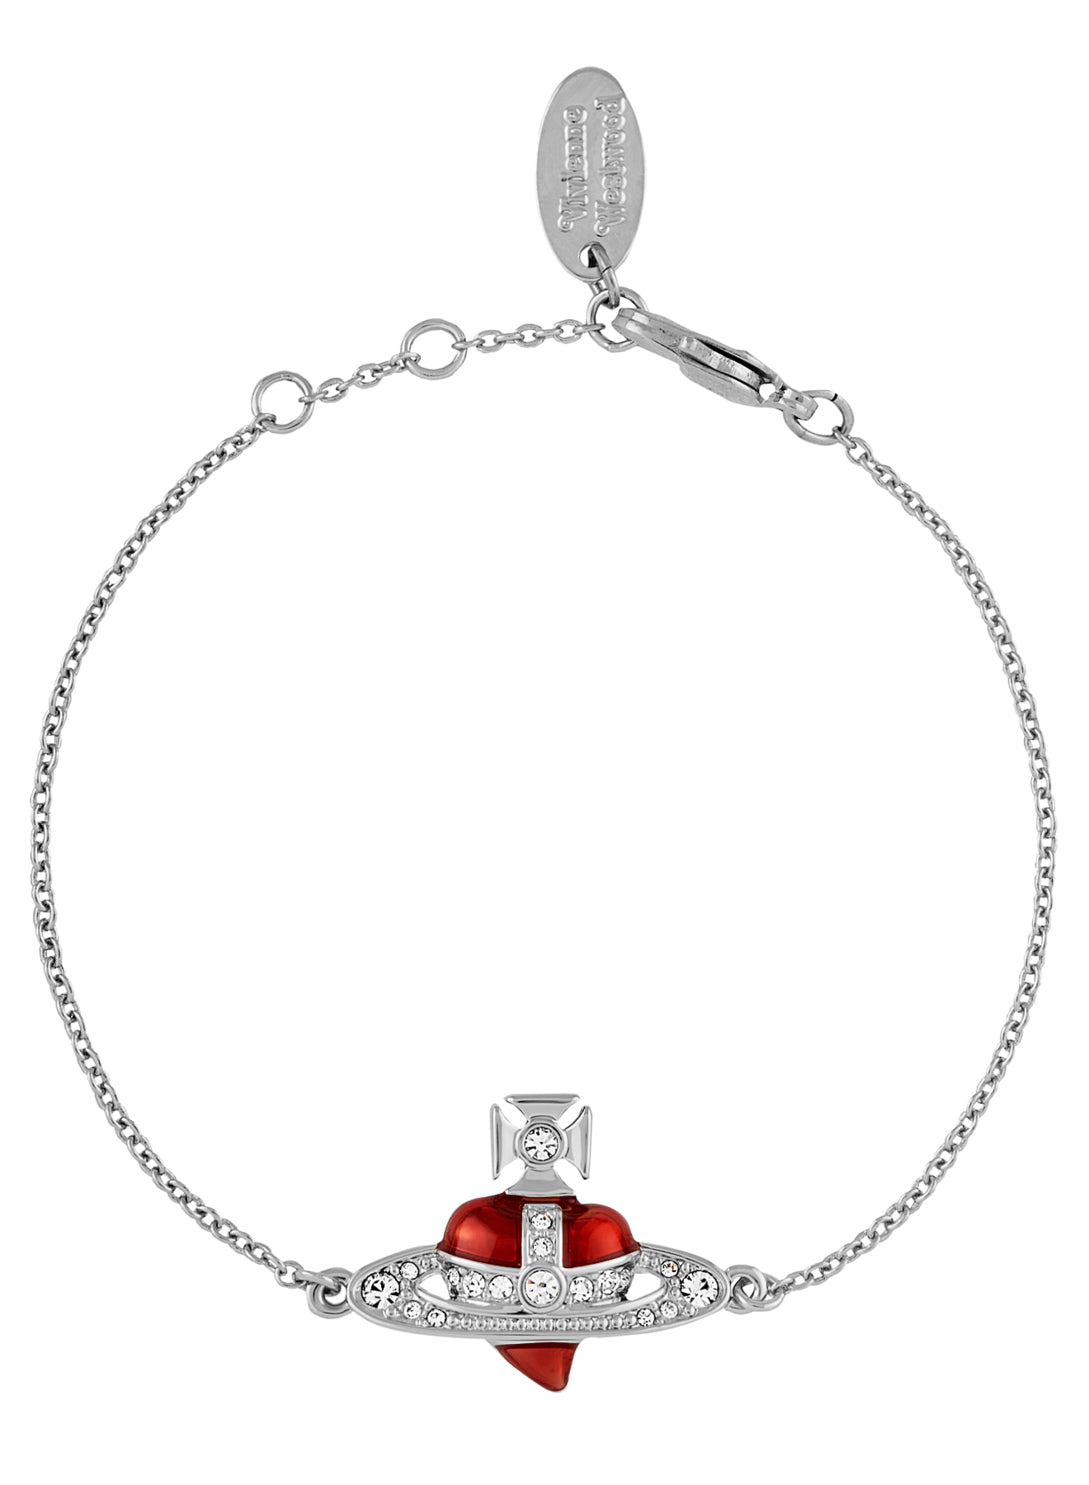 New Diamante Heart Bracelet - Silver/Indian Pink - 6102021T-02P383